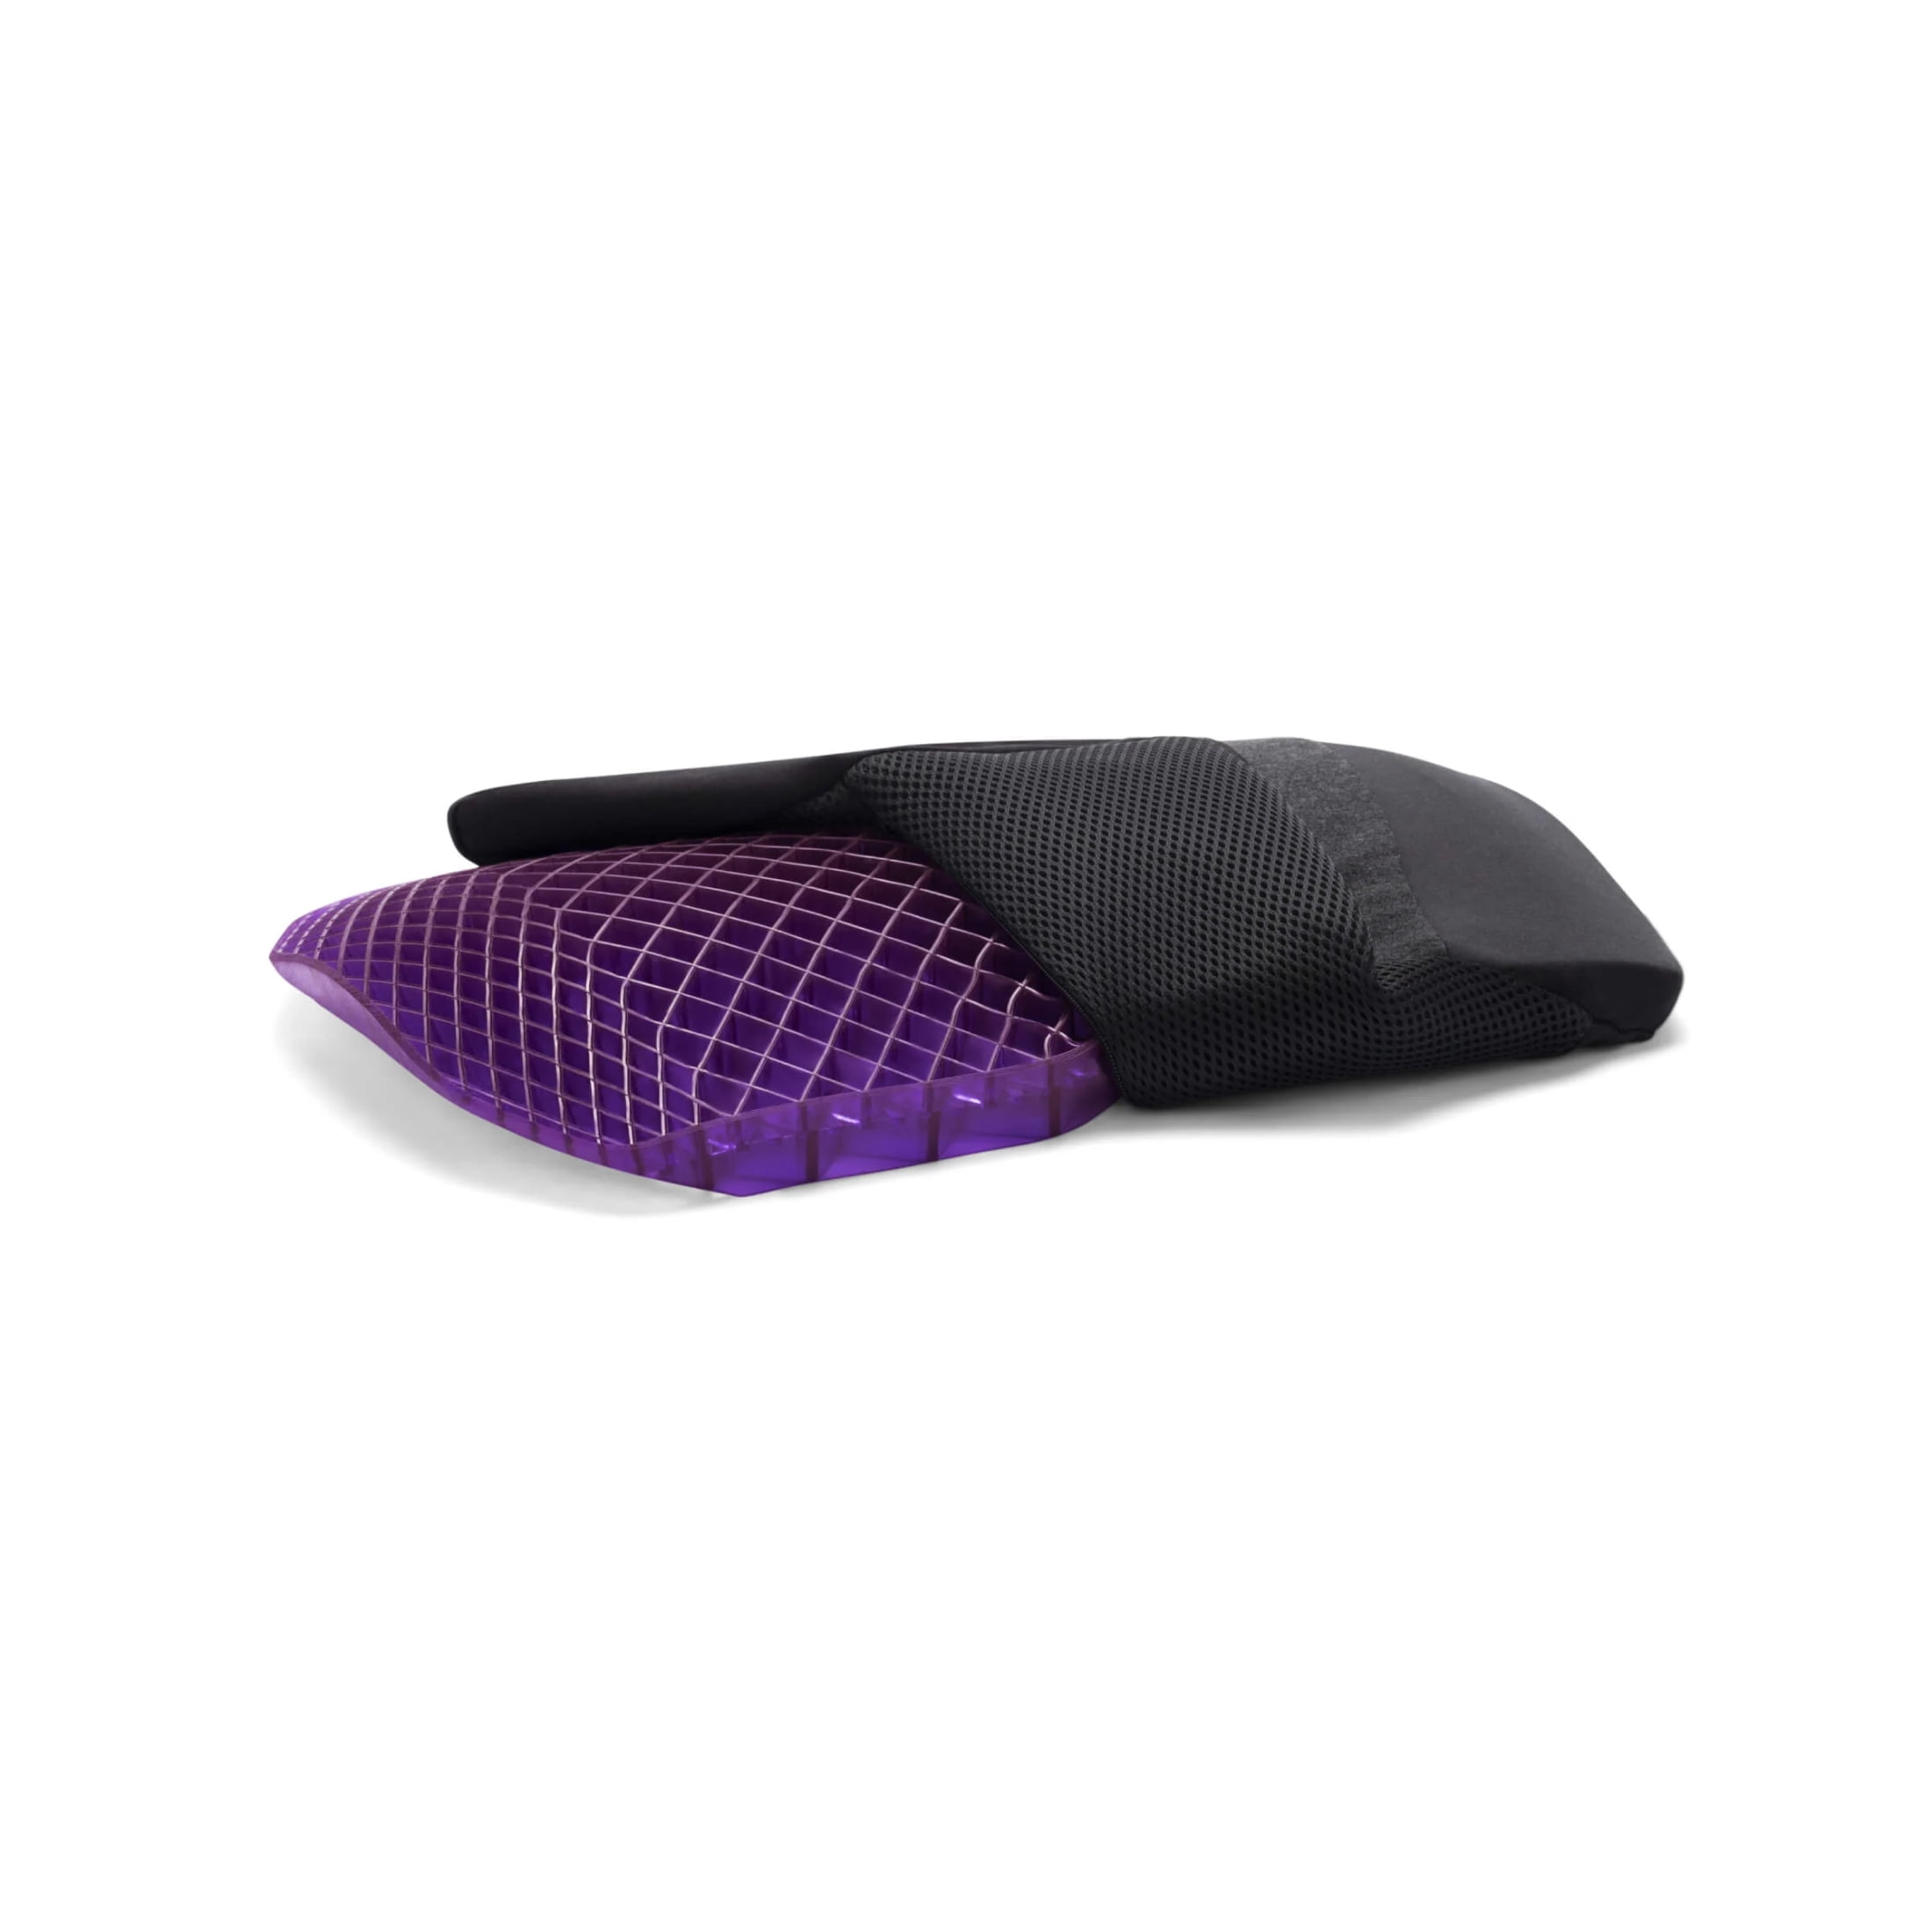 Wondergel/Purple Royal Purple Gel Seat Cushion - 17 1/4 x 15 1/4 x 2